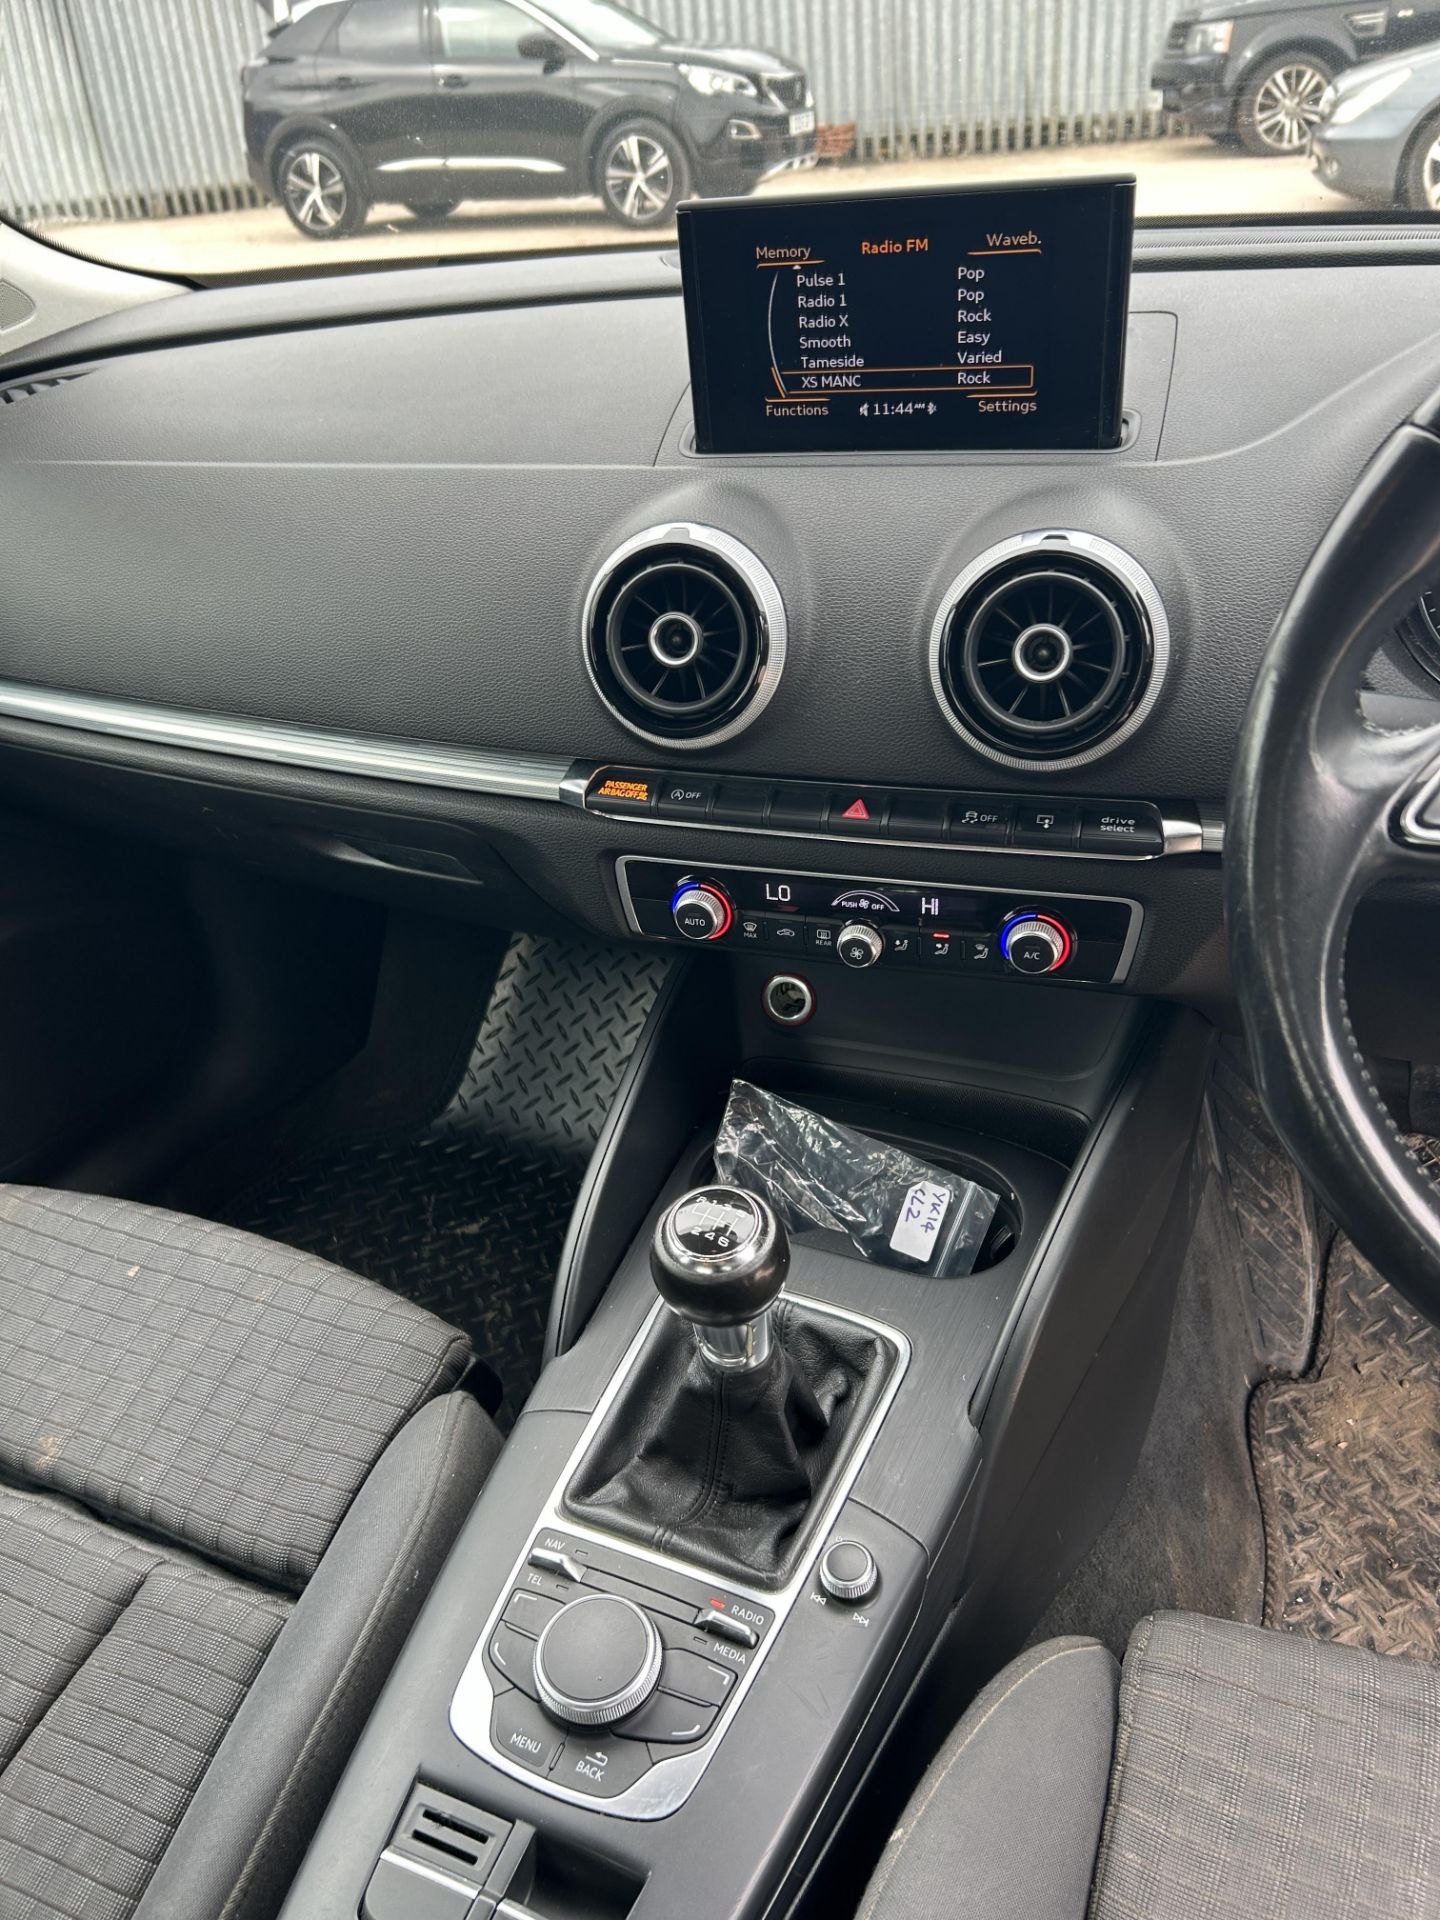 Audi A3 Sport TDI Diesel 5 Door Hatchback | YK14 CLZ | 178,860 Miles - Image 12 of 14